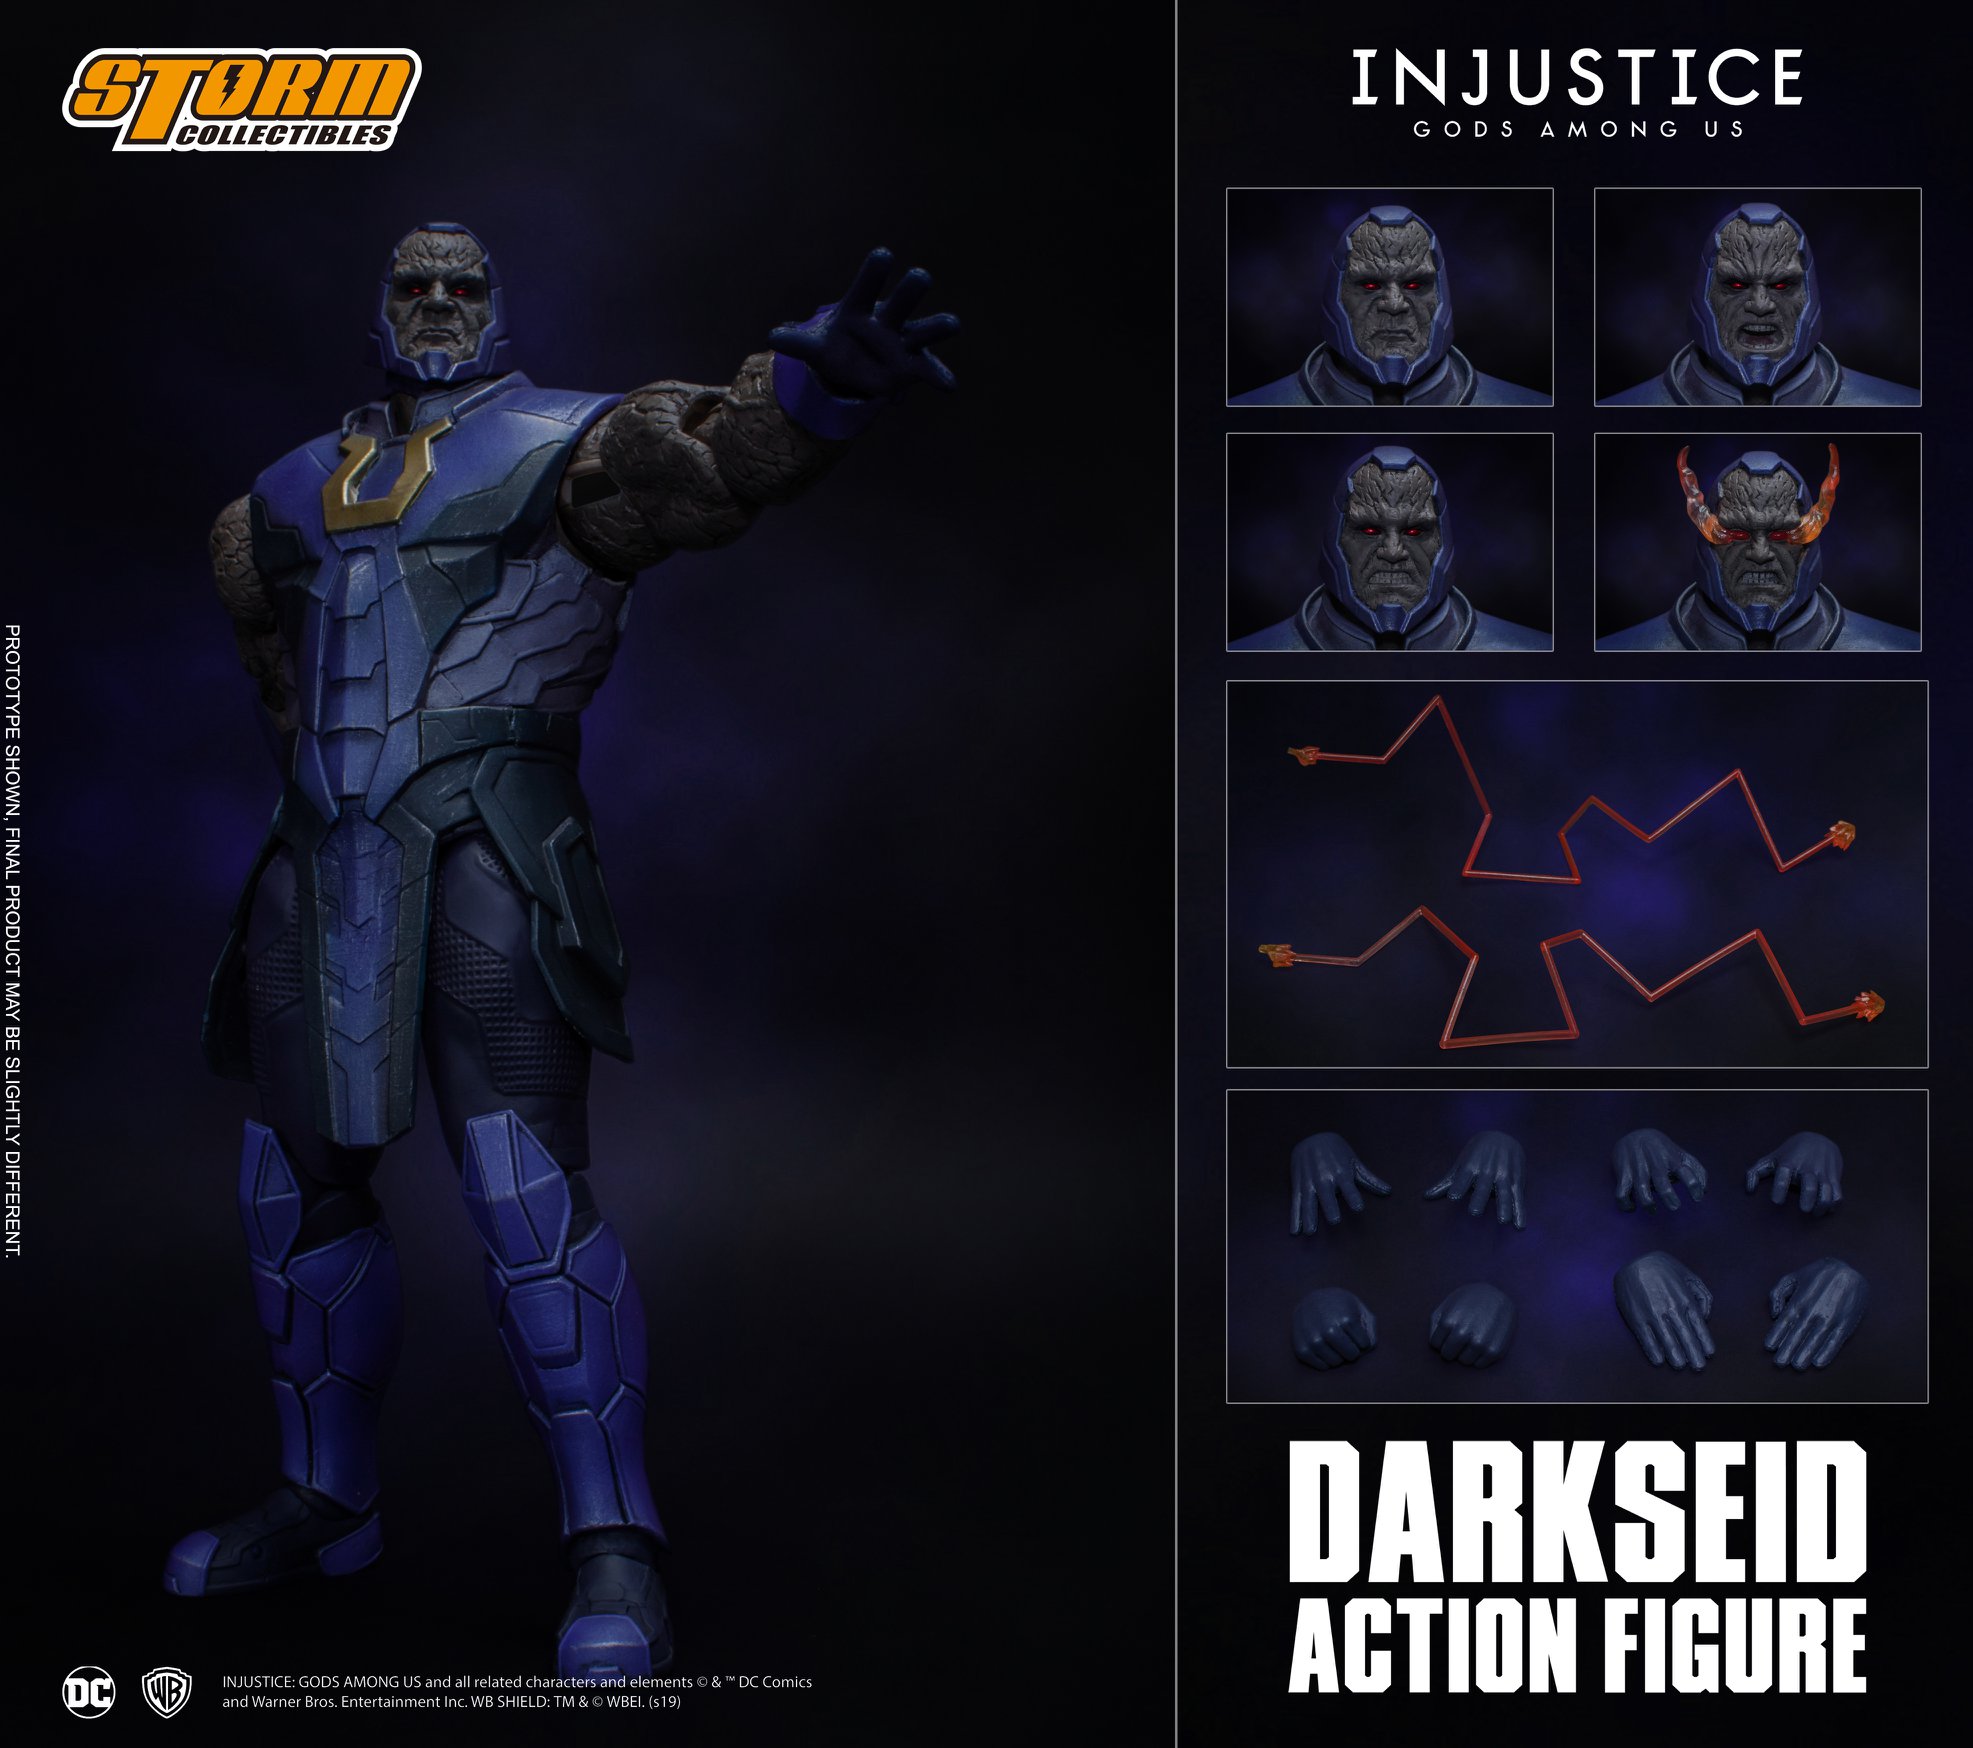 Darkseid Storm Collectibles Figure